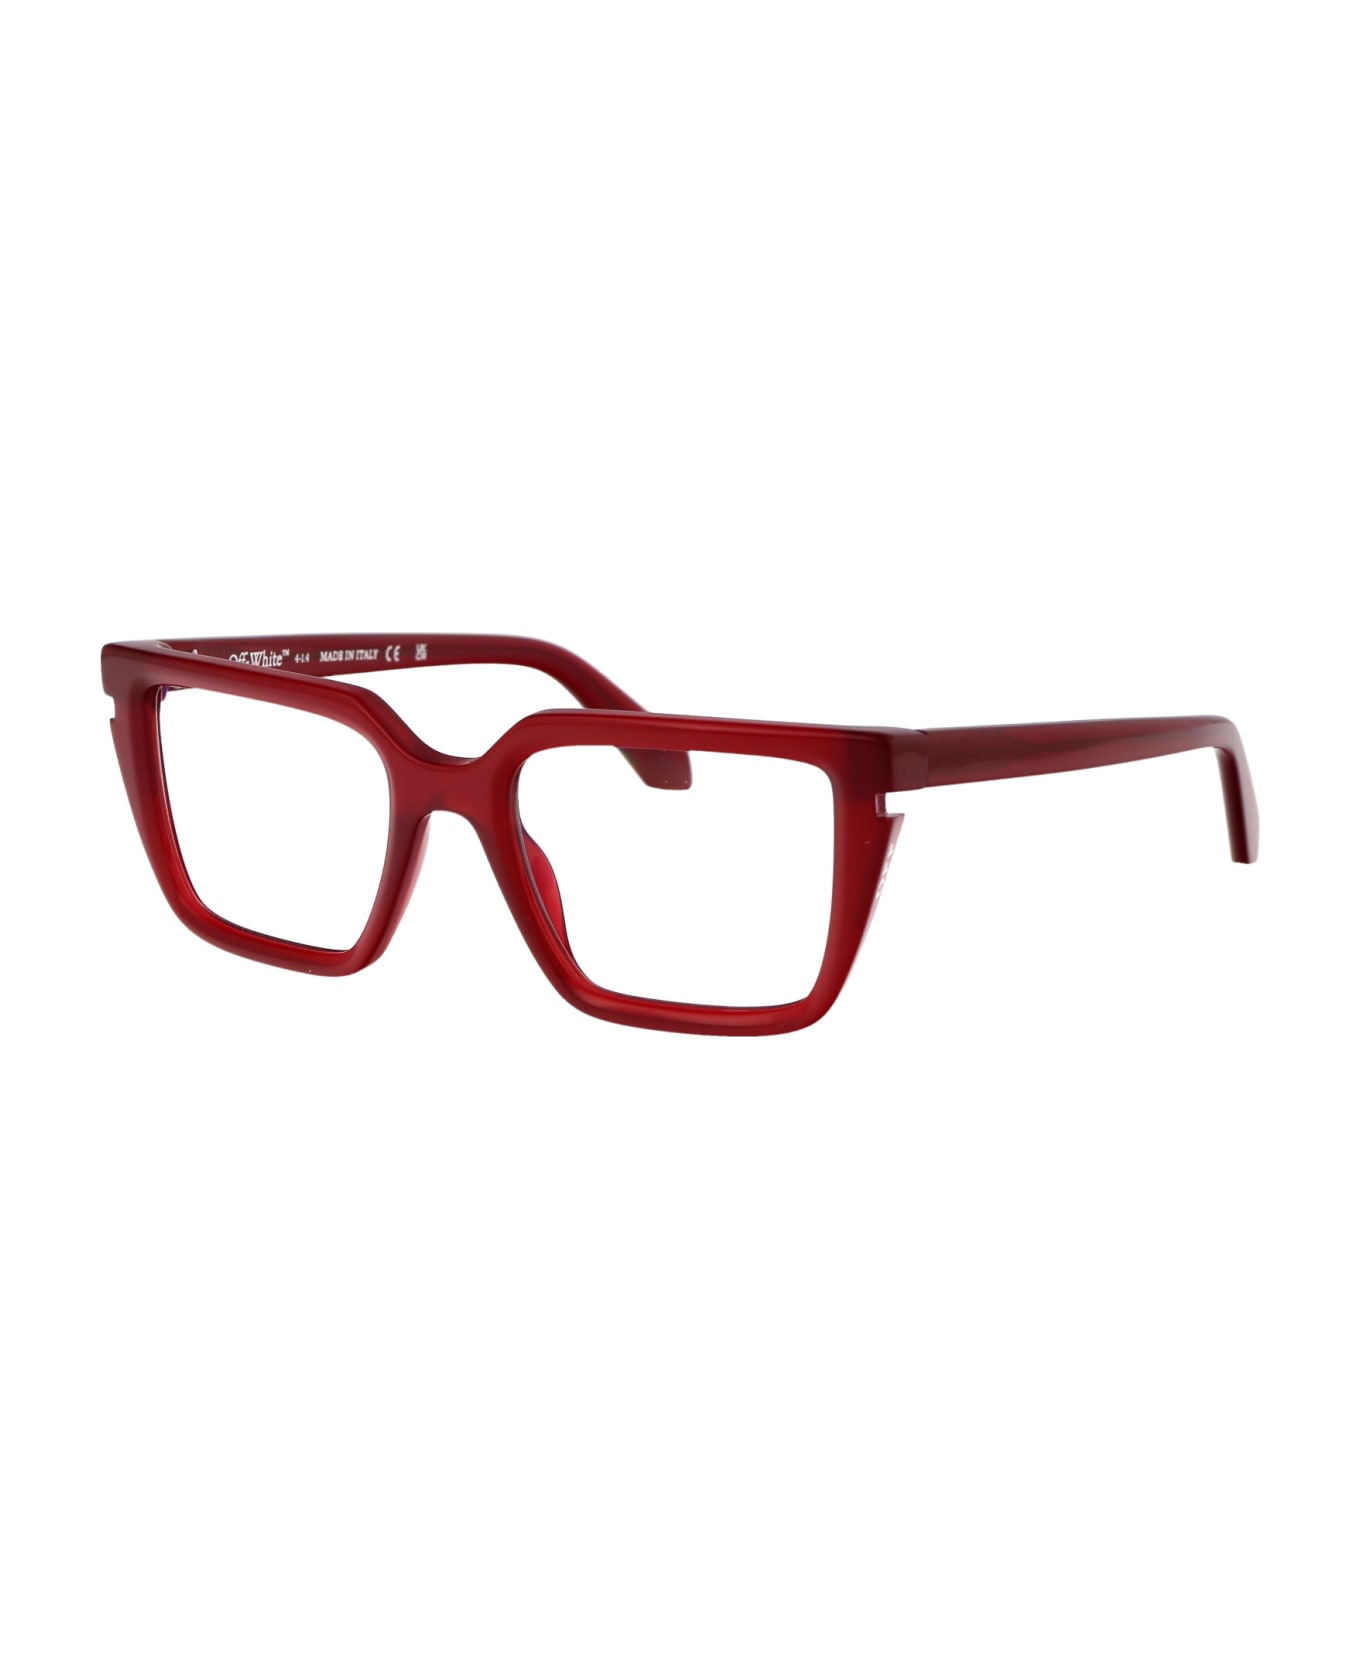 Off-White Optical Style 52 Glasses - 2800 BURGUNDY 